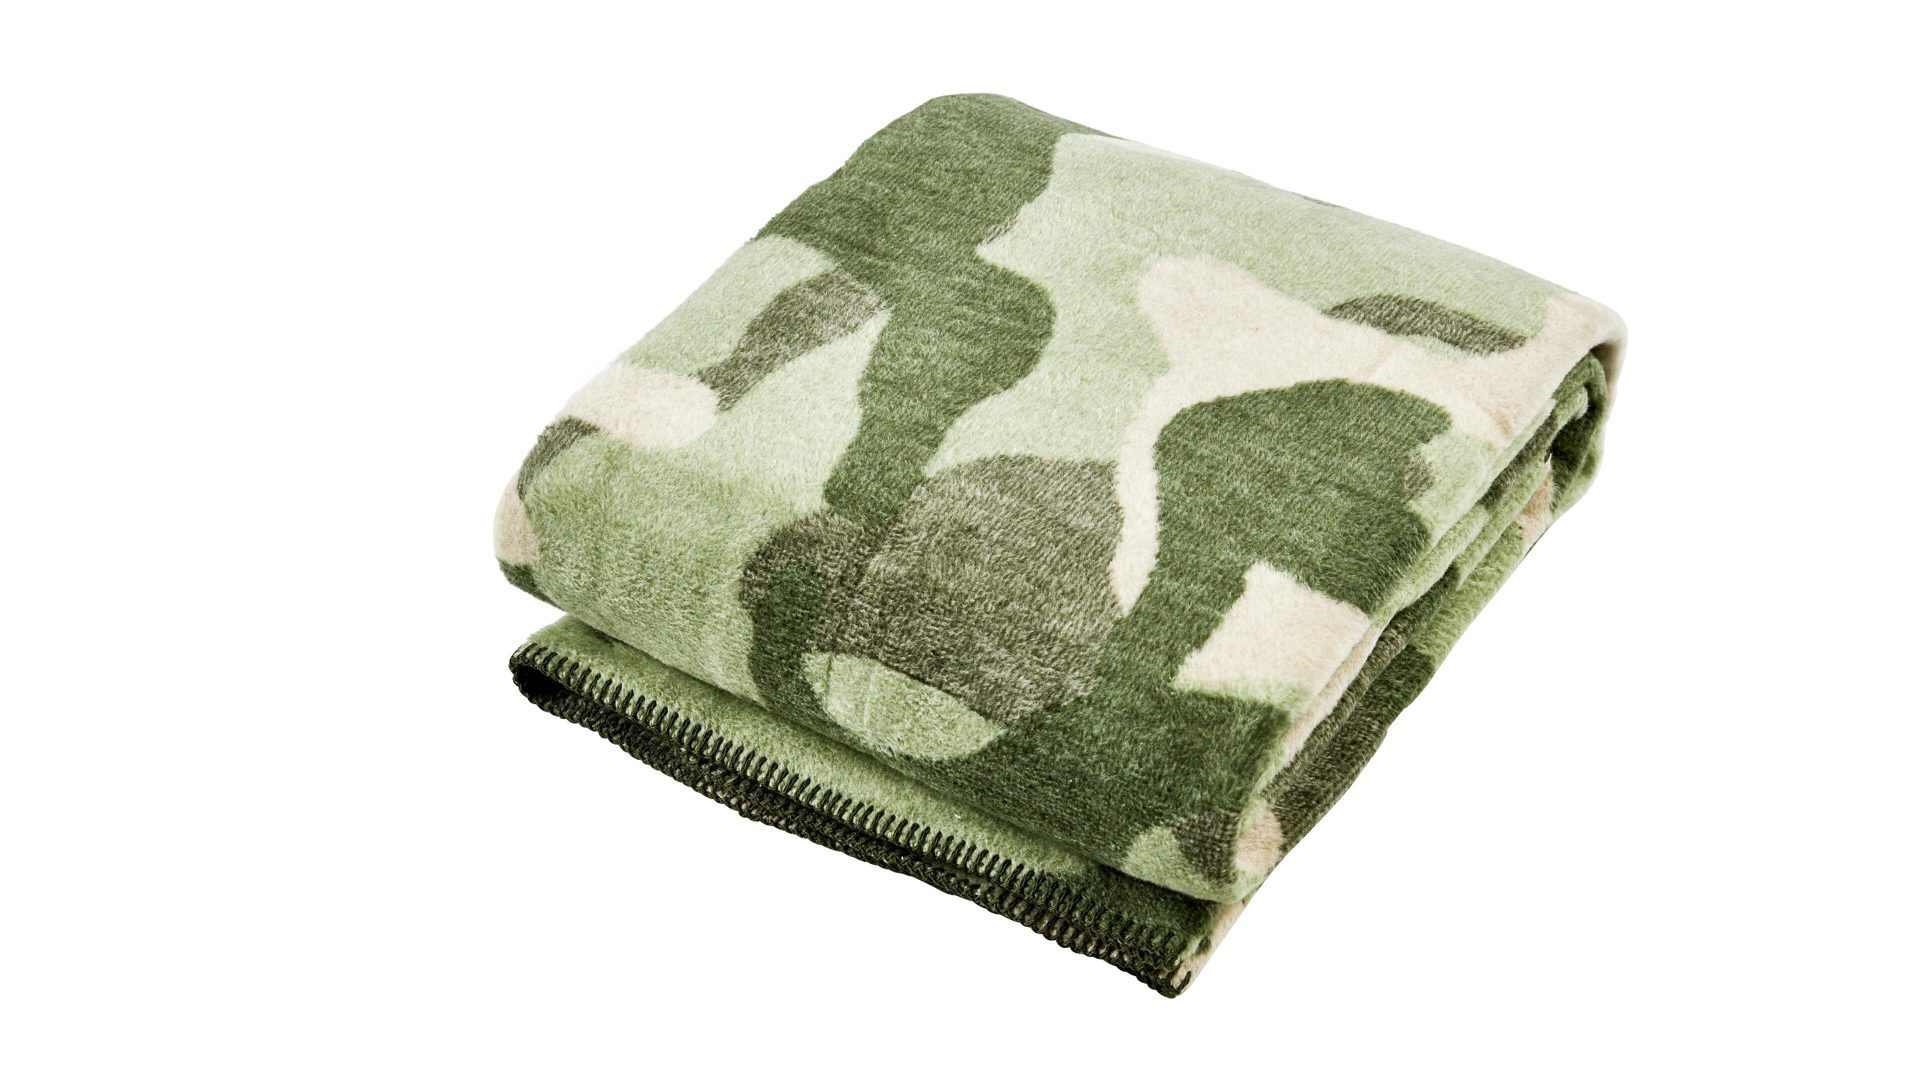 Wohndecke Done by karabel home company aus Stoff in Grün Done Wohndecke Blanket Camouflage khakifarbenes Camouflagemuster – ca. 150 x 200 cm